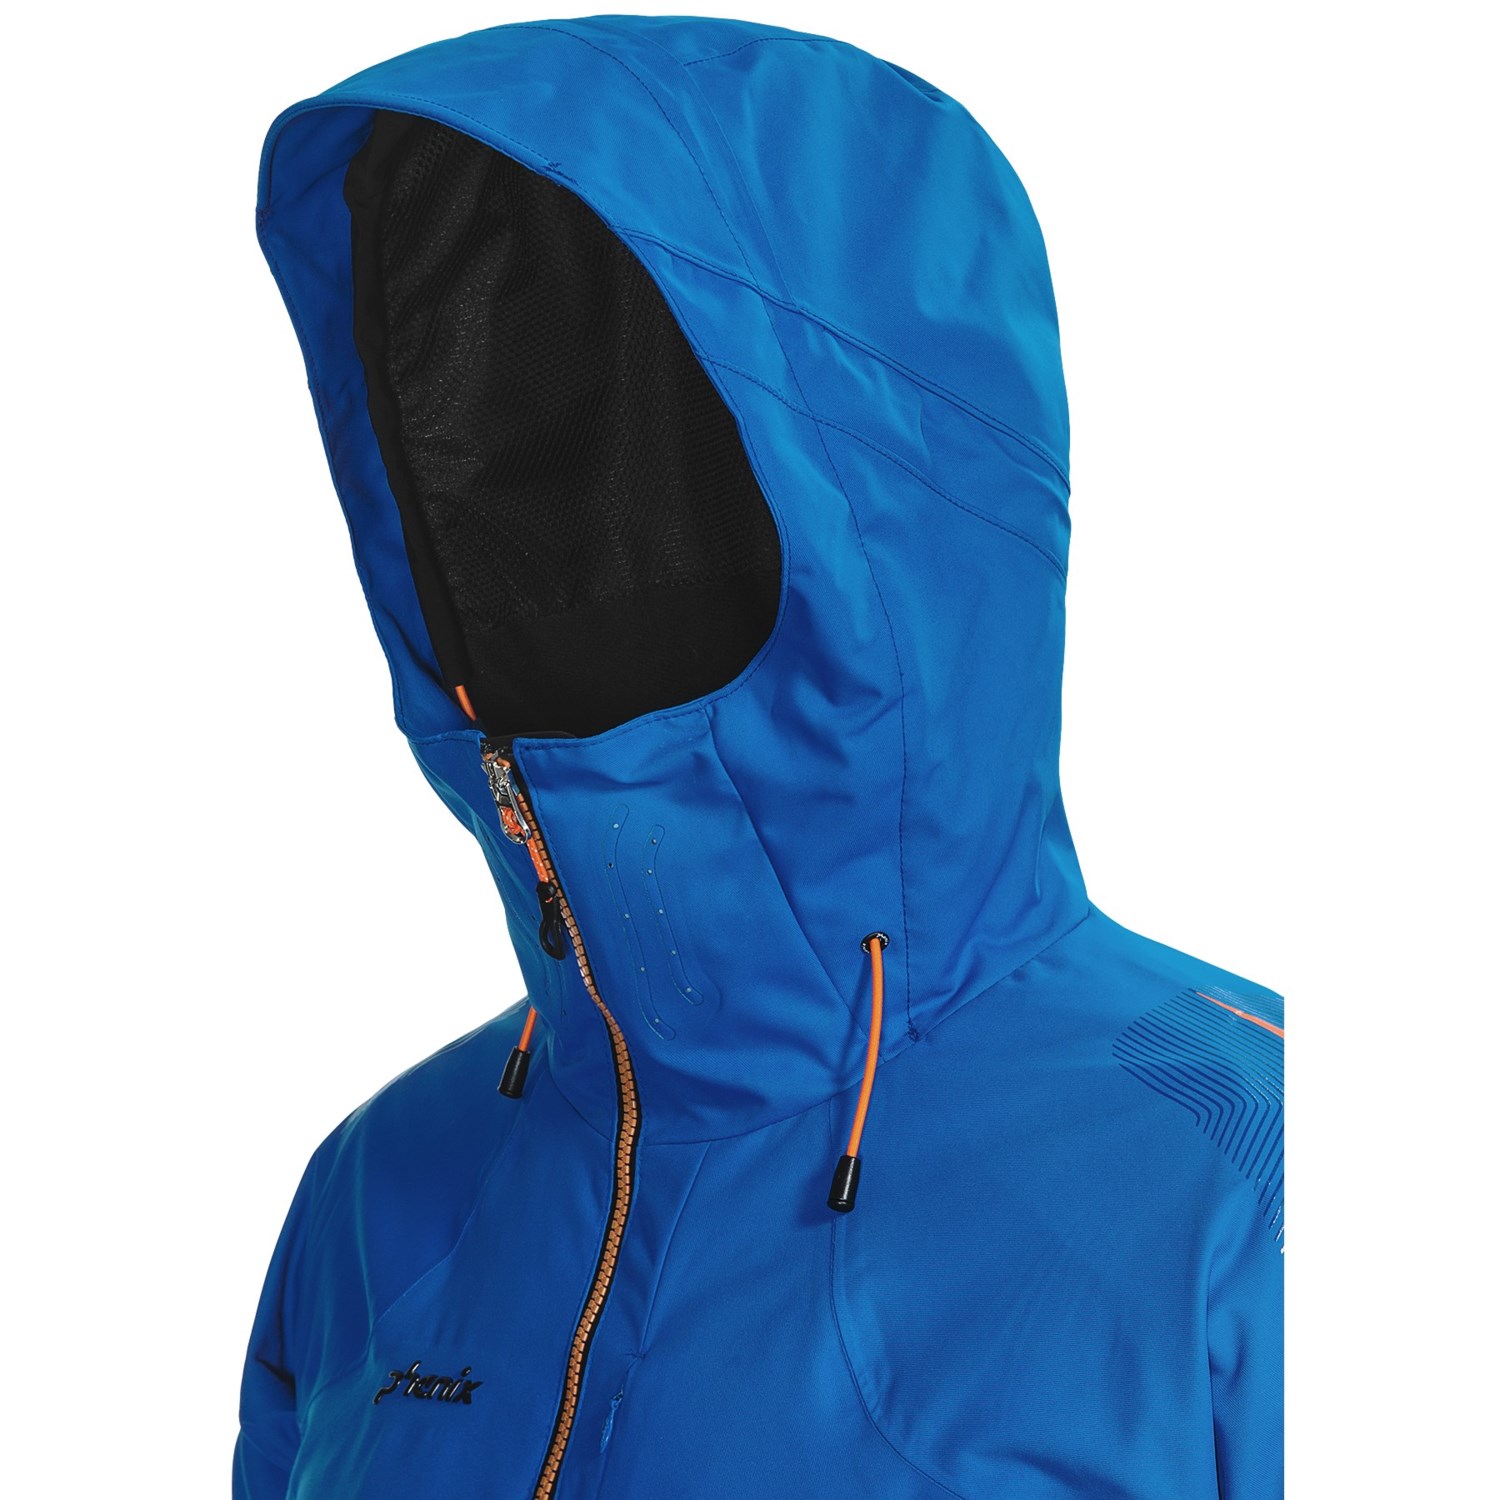 Phenix Sogne Ski Jacket (For Men) 6302Y - Save 30%